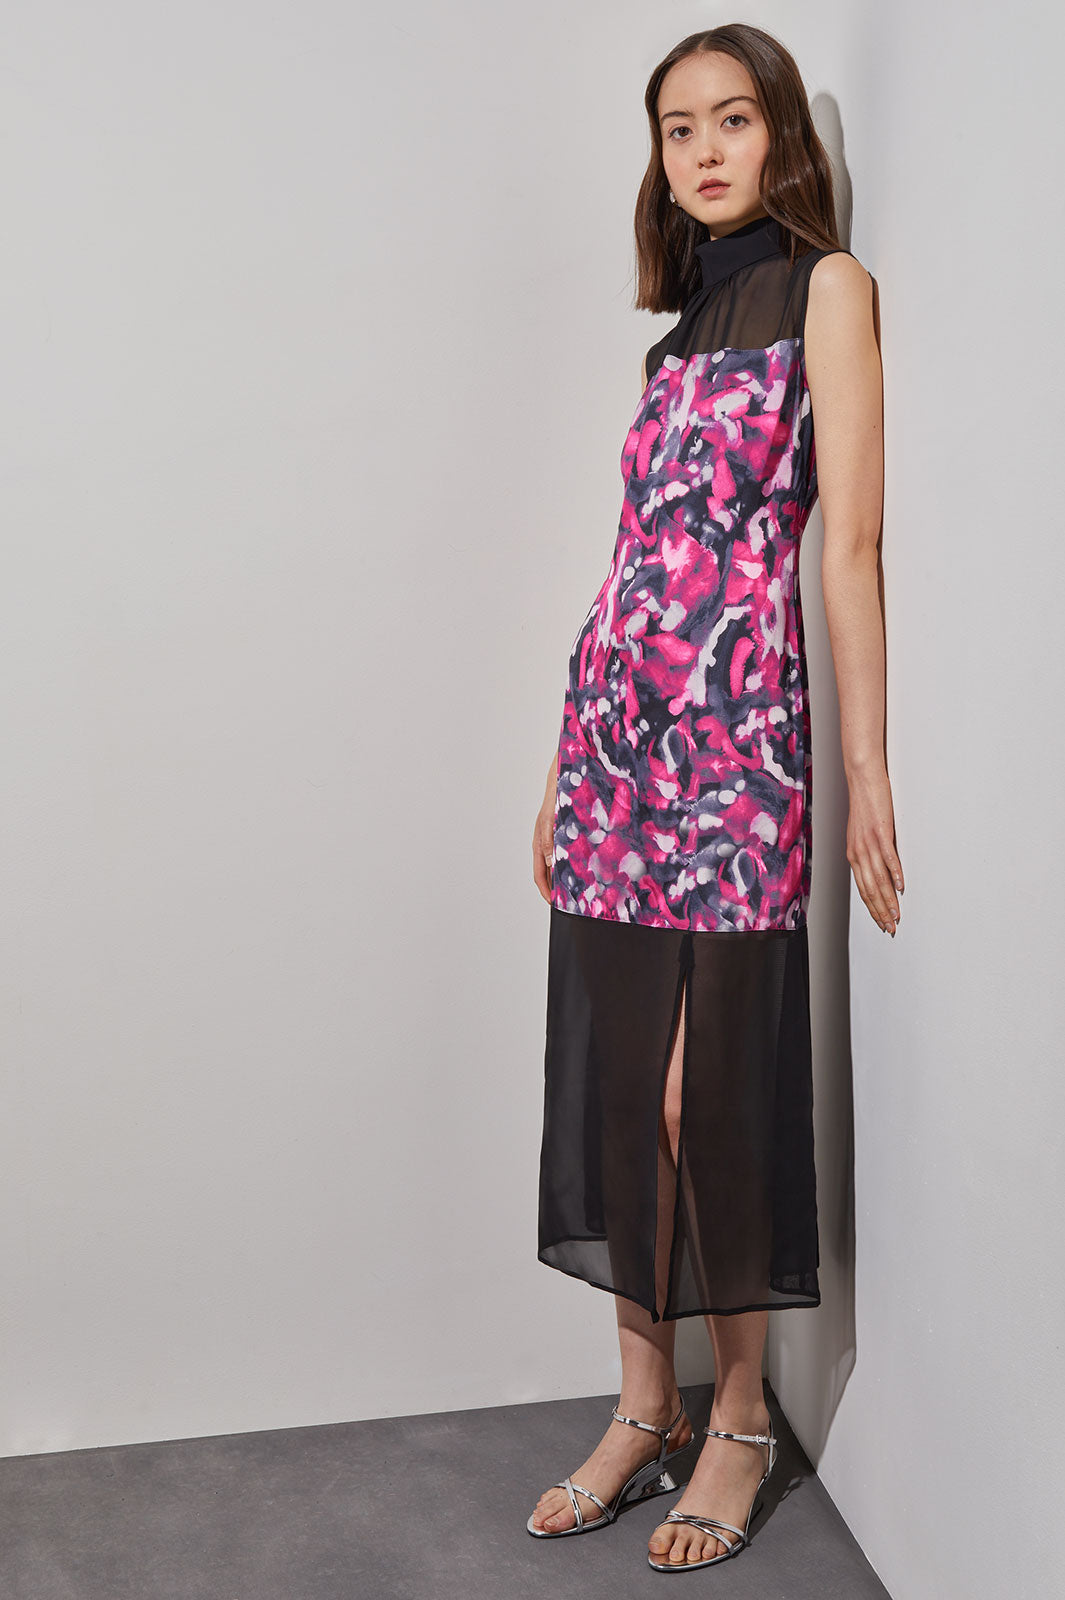 Zara Long Print Jumpsuit Pink Floral Mock Neck Sleeveless Size XS